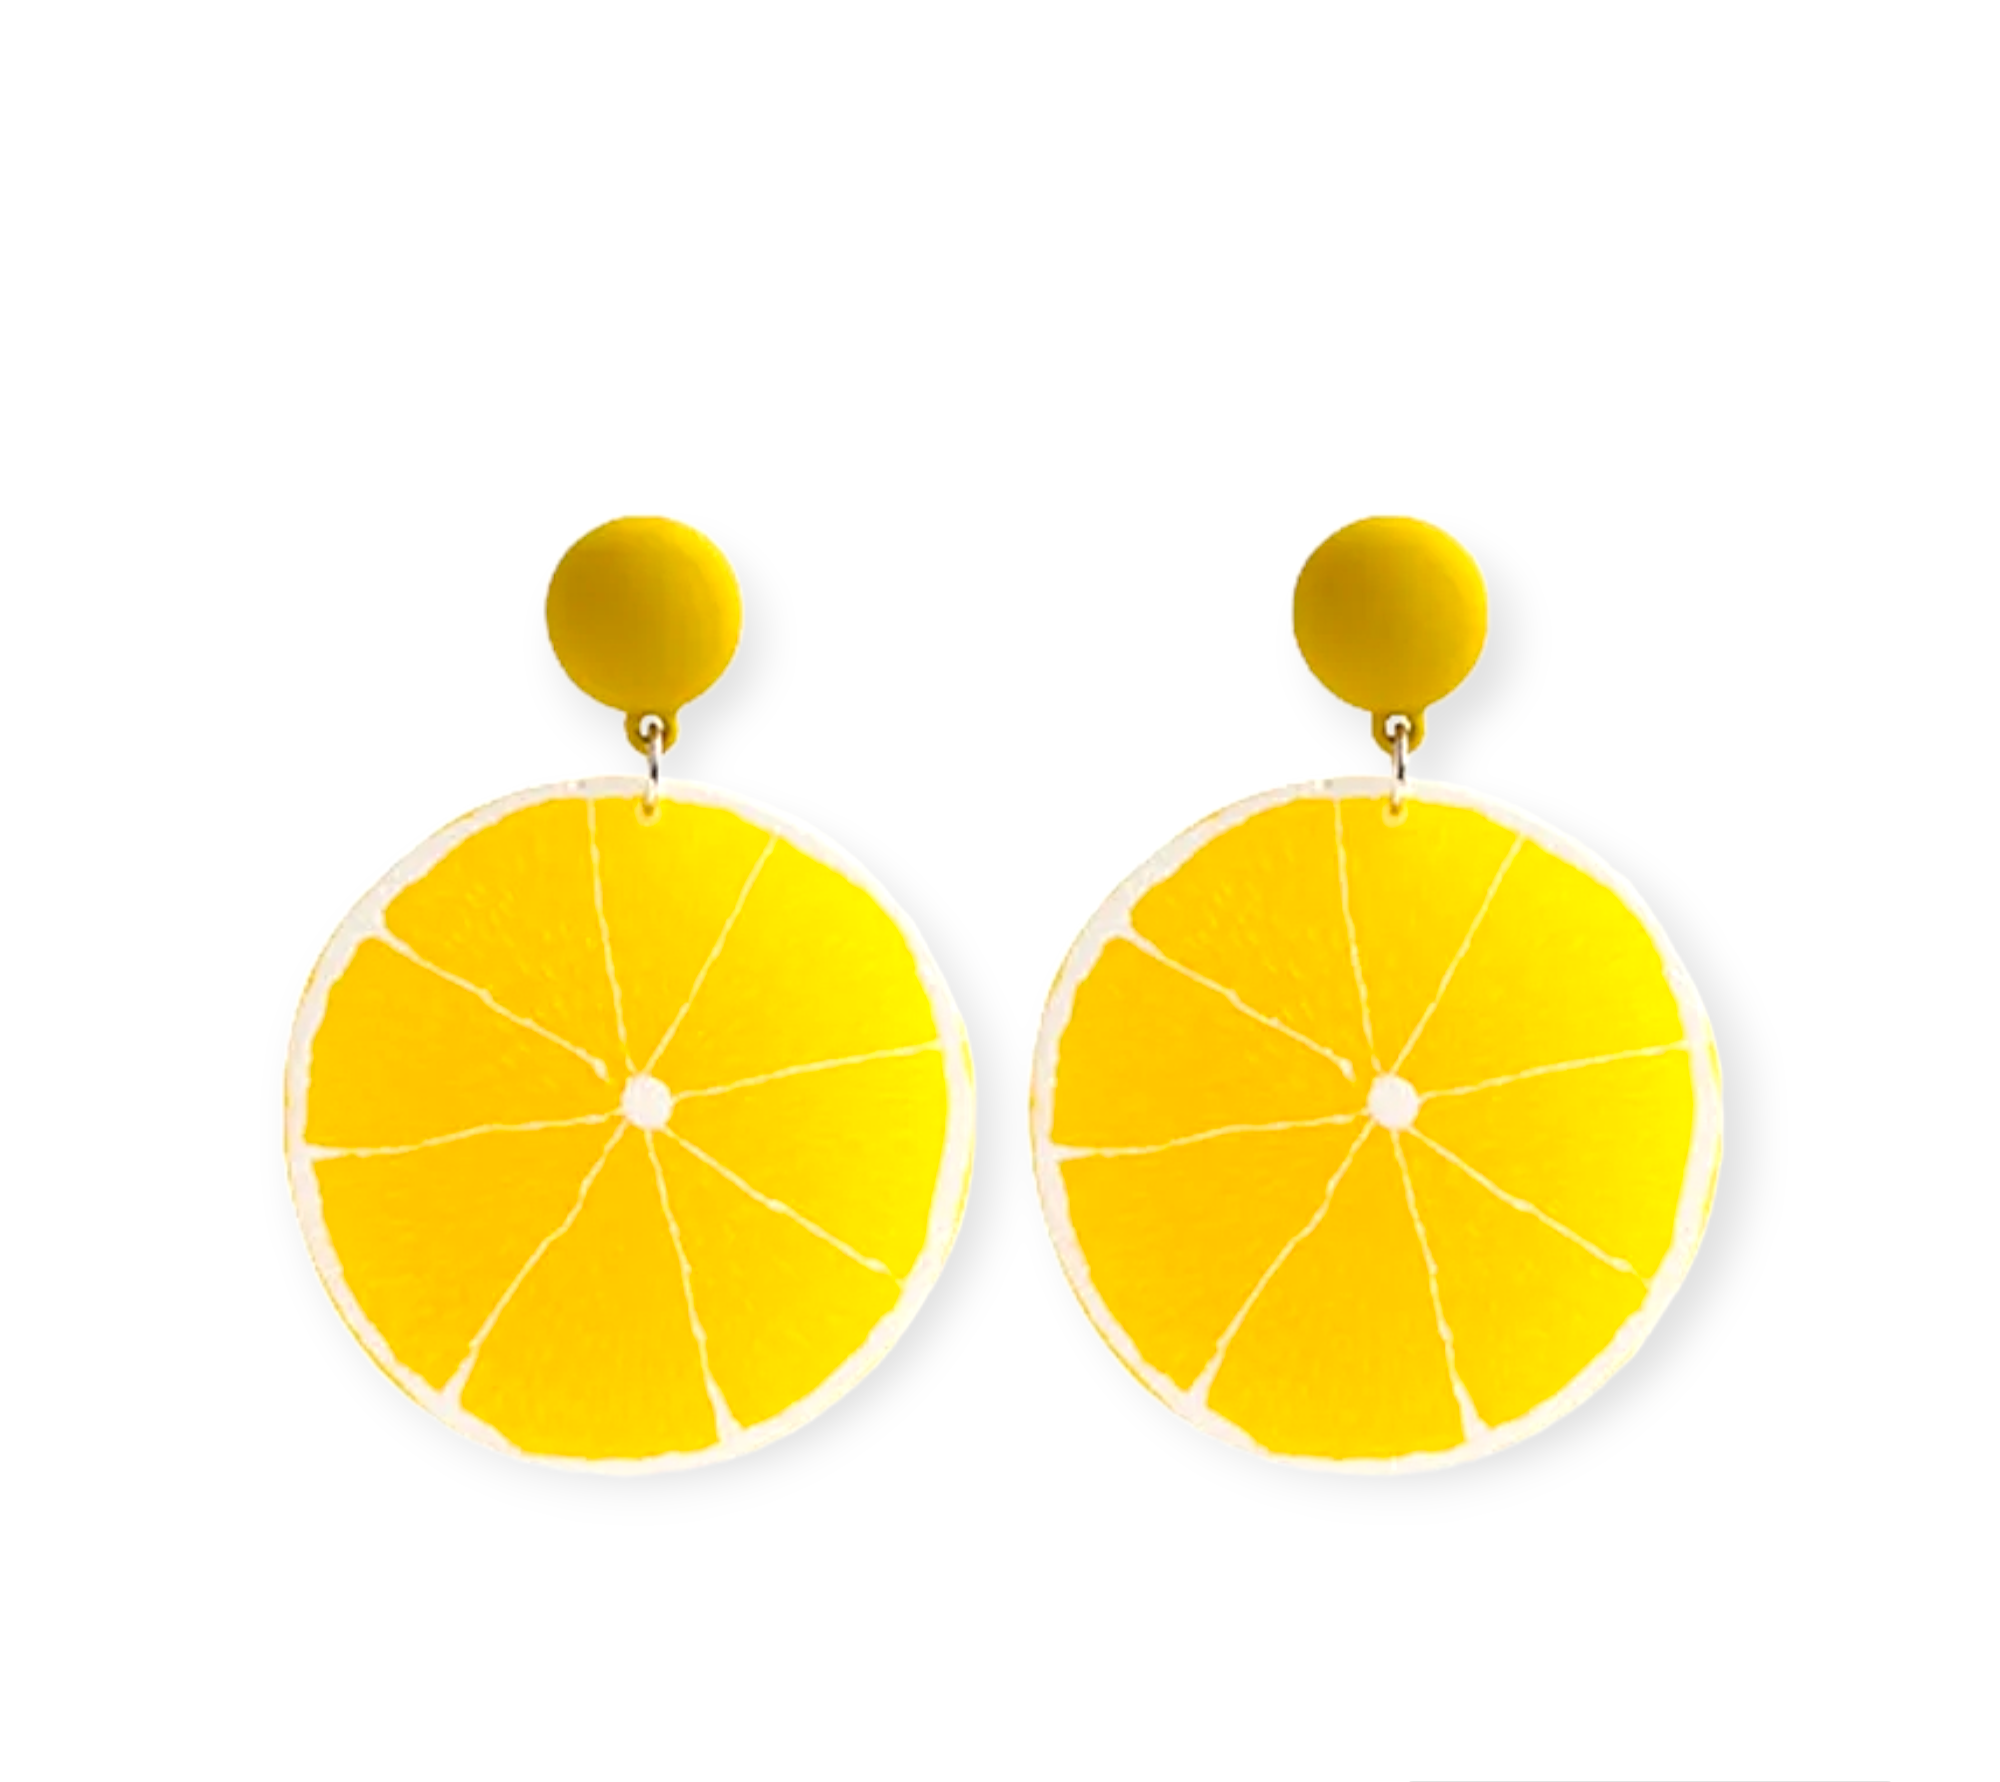 Citrus Earrings